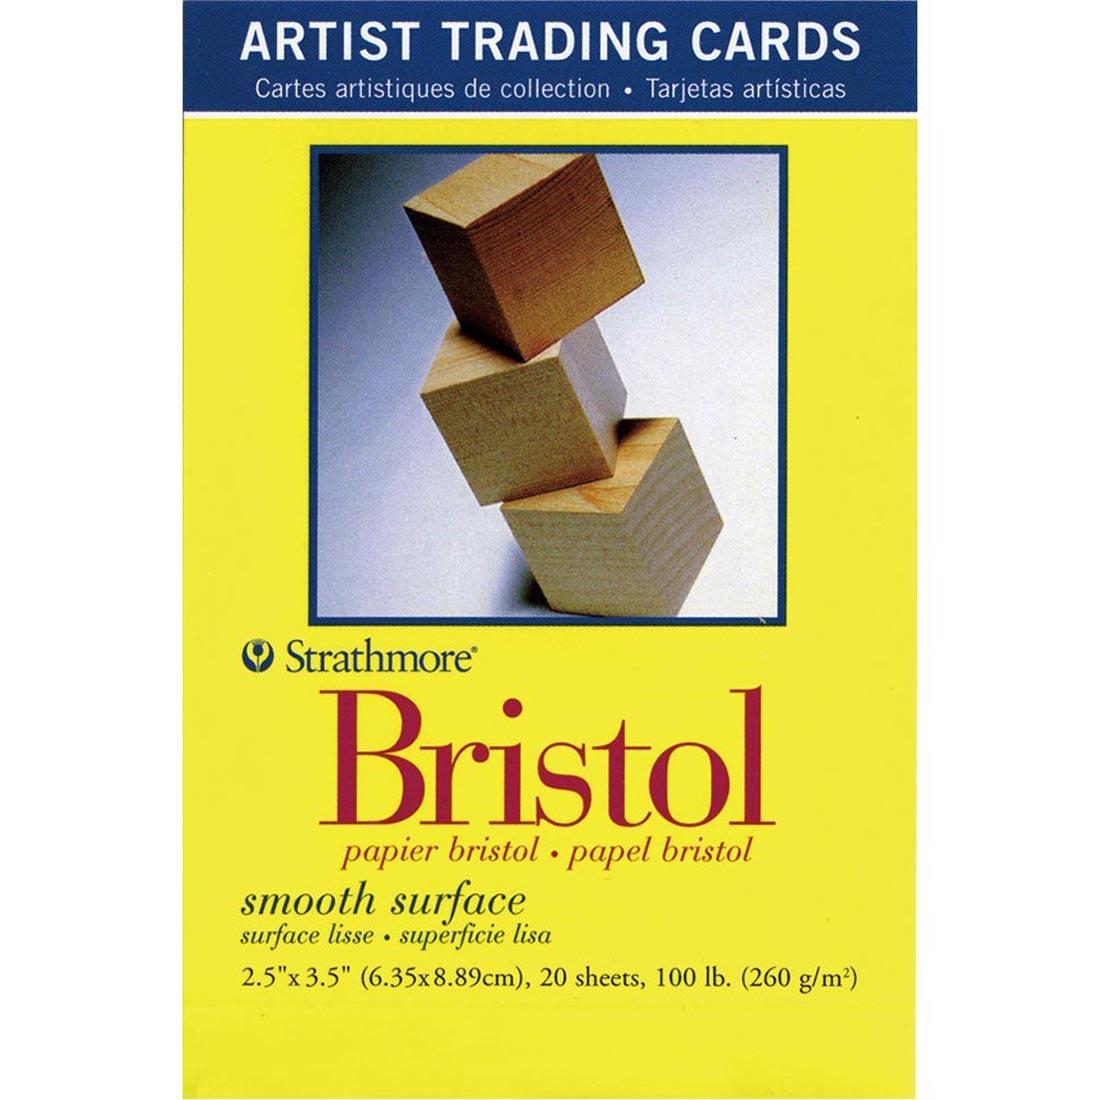 Strathmore Smooth Bristol Artist Trading Cards